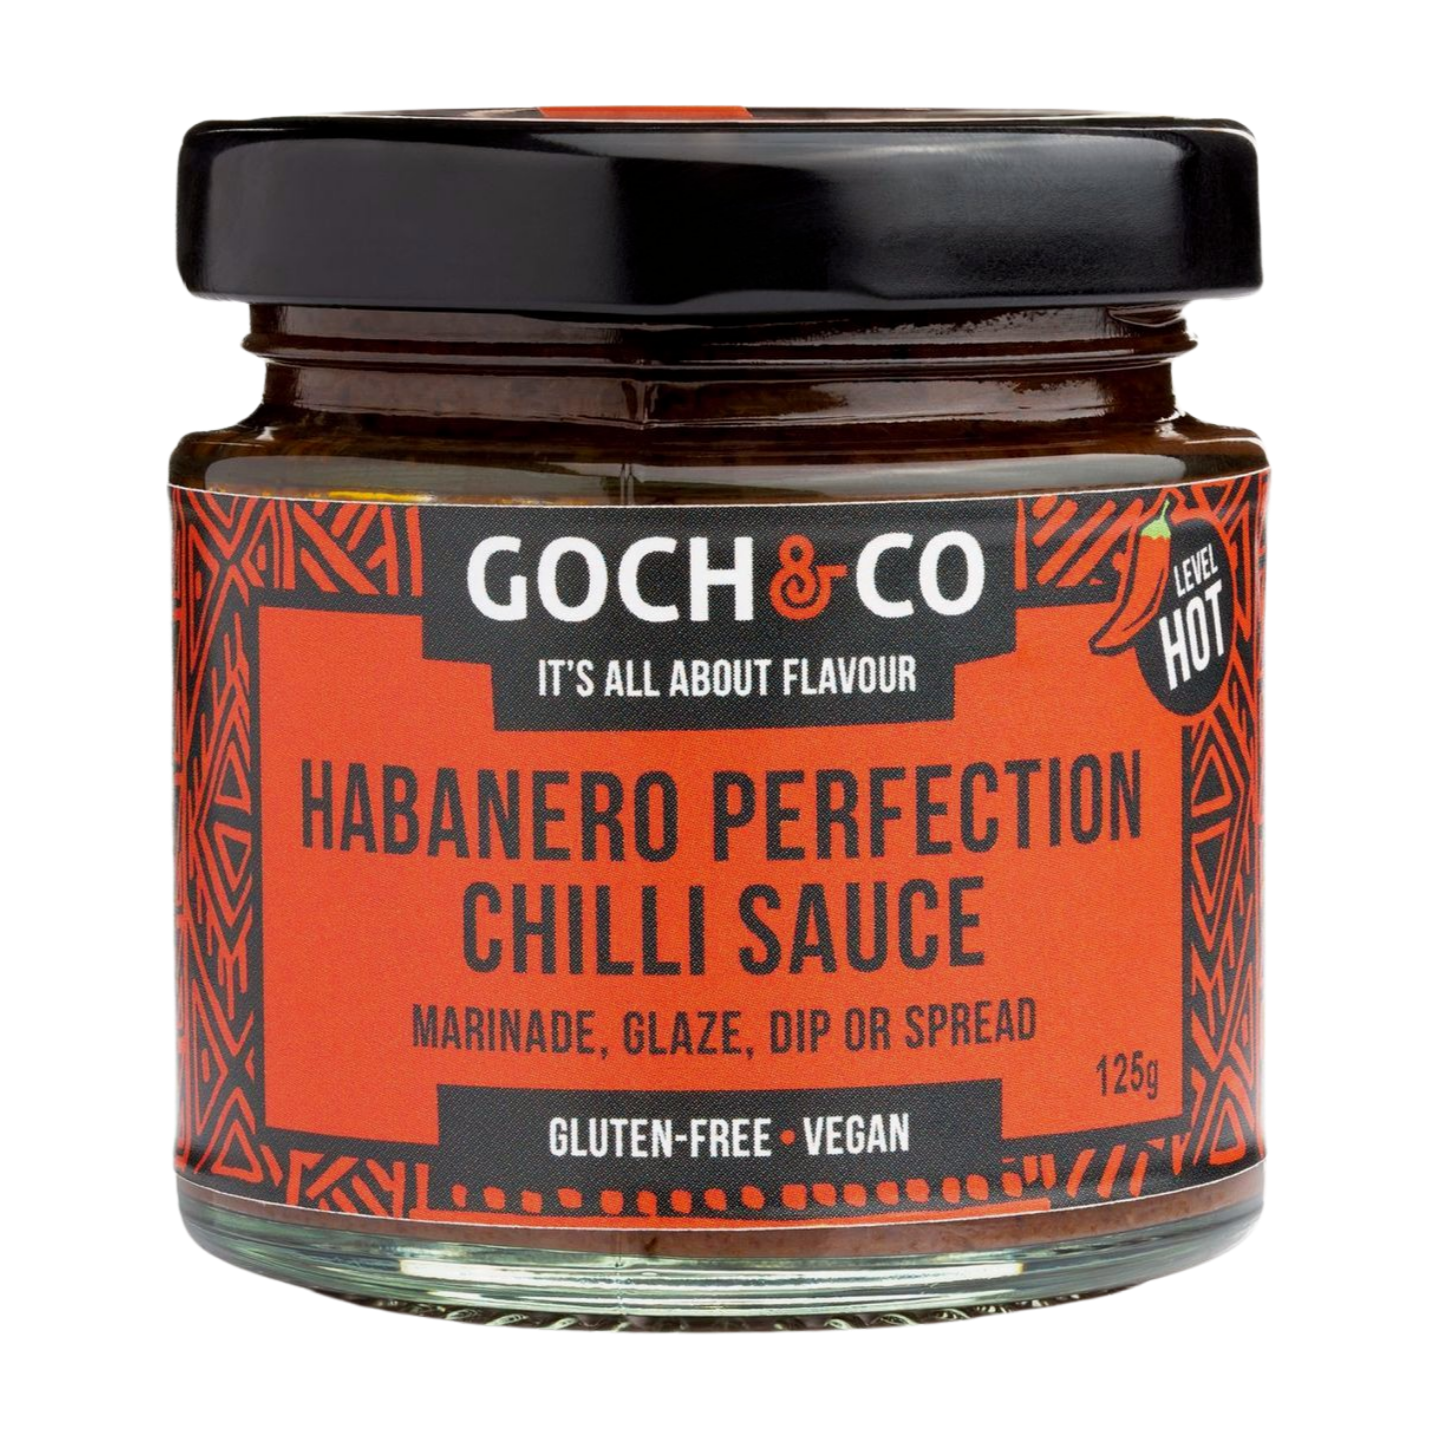 Goch & Co Habanero Perfection Chilli Sauce (6x125g)